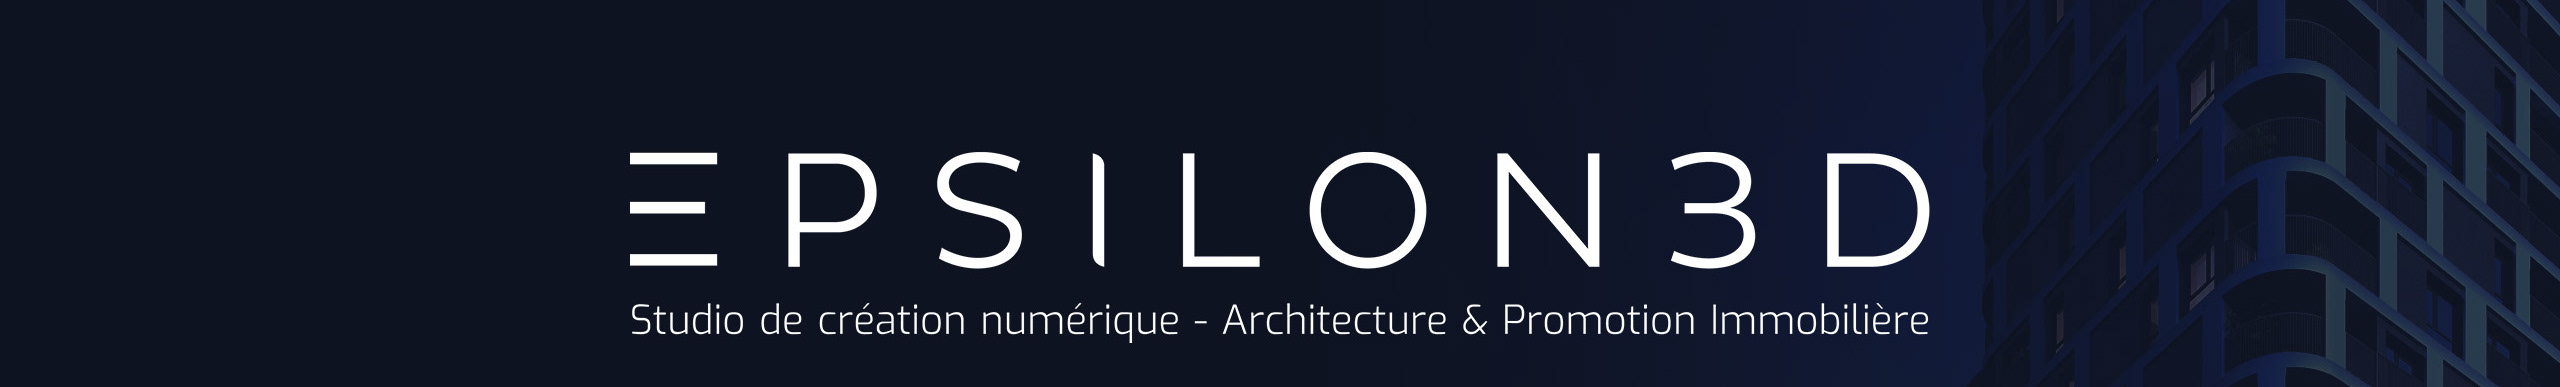 Epsilon 3D Studio's profile banner